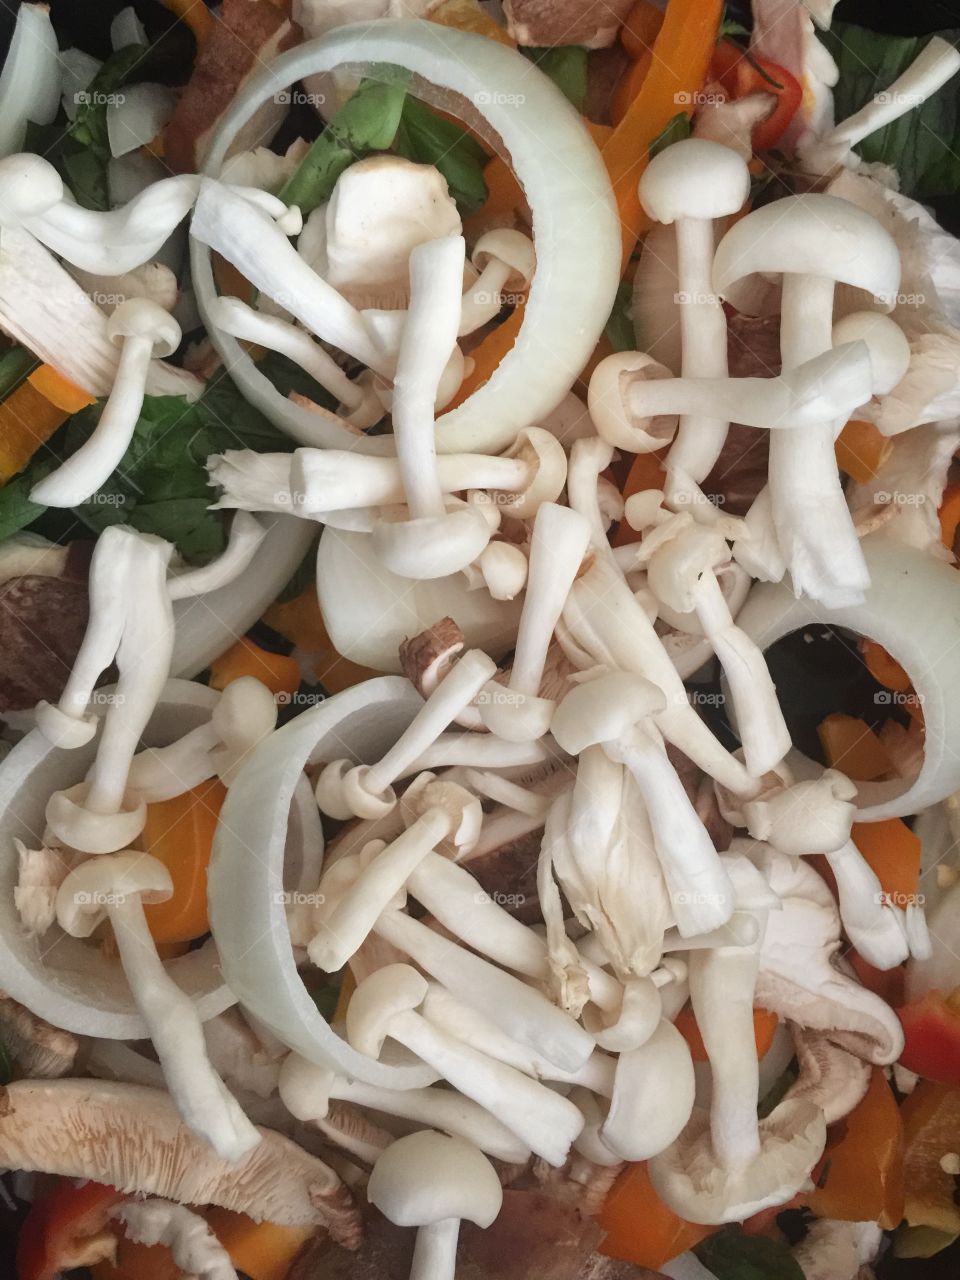 Mushrooms and produce chopped 